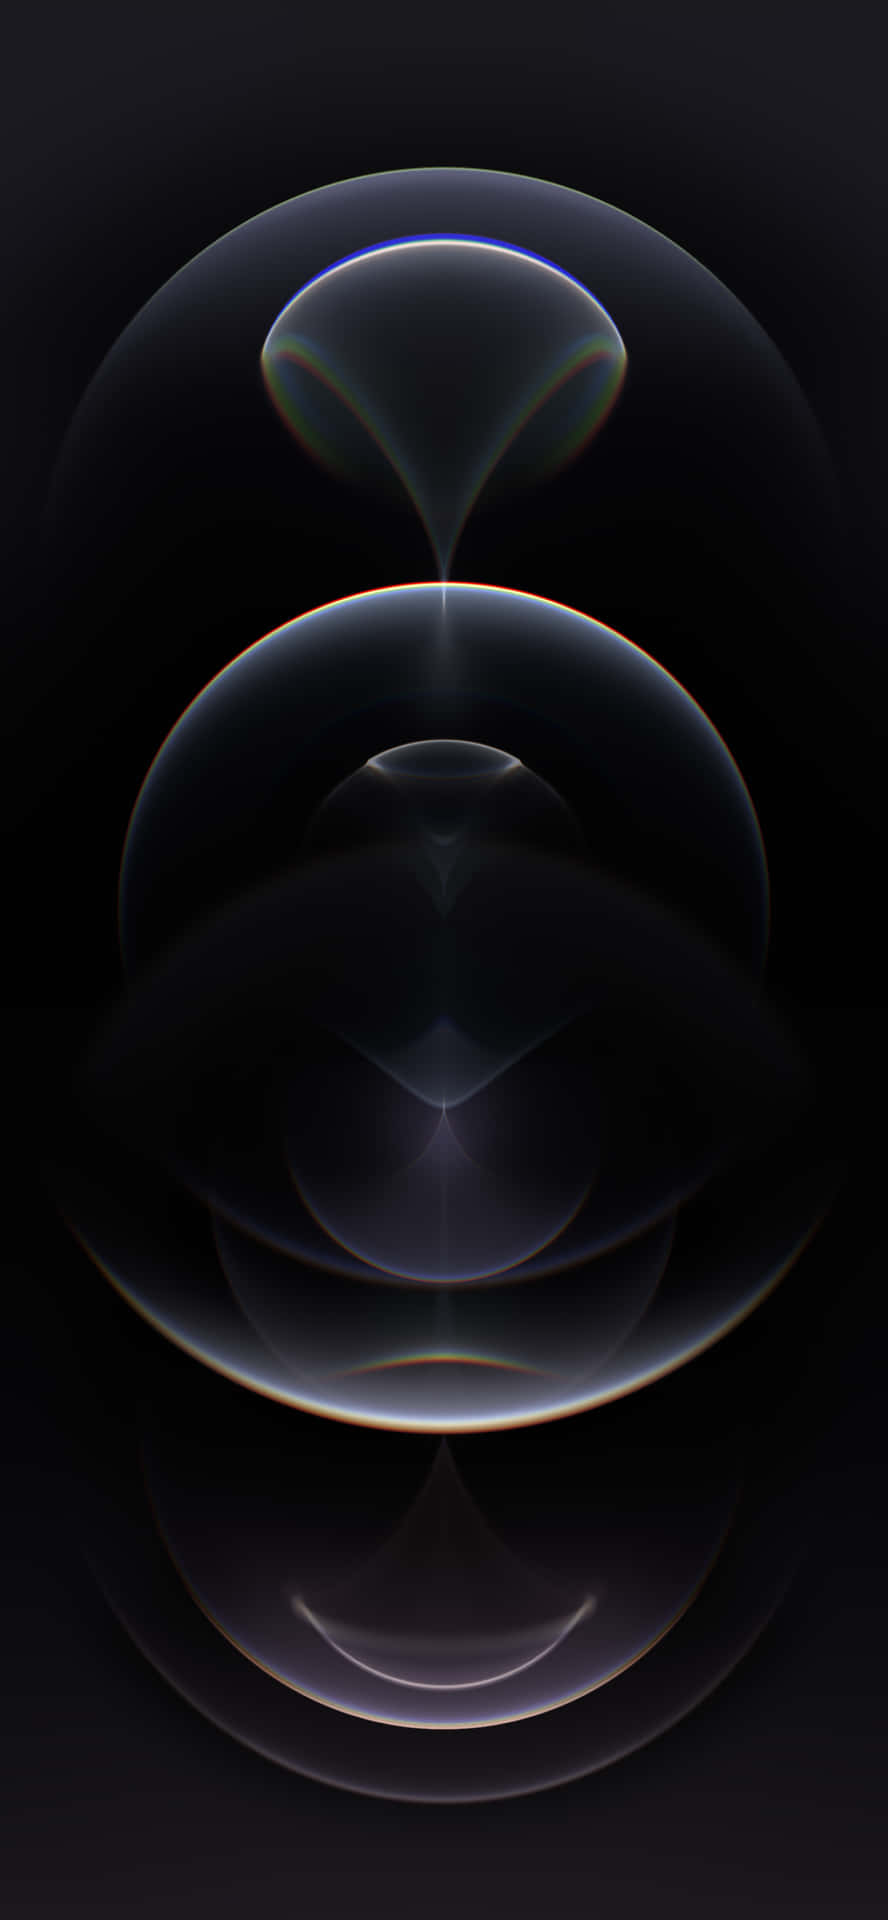 Black And Silver Apple Iphone Bubble Design Wallpaper